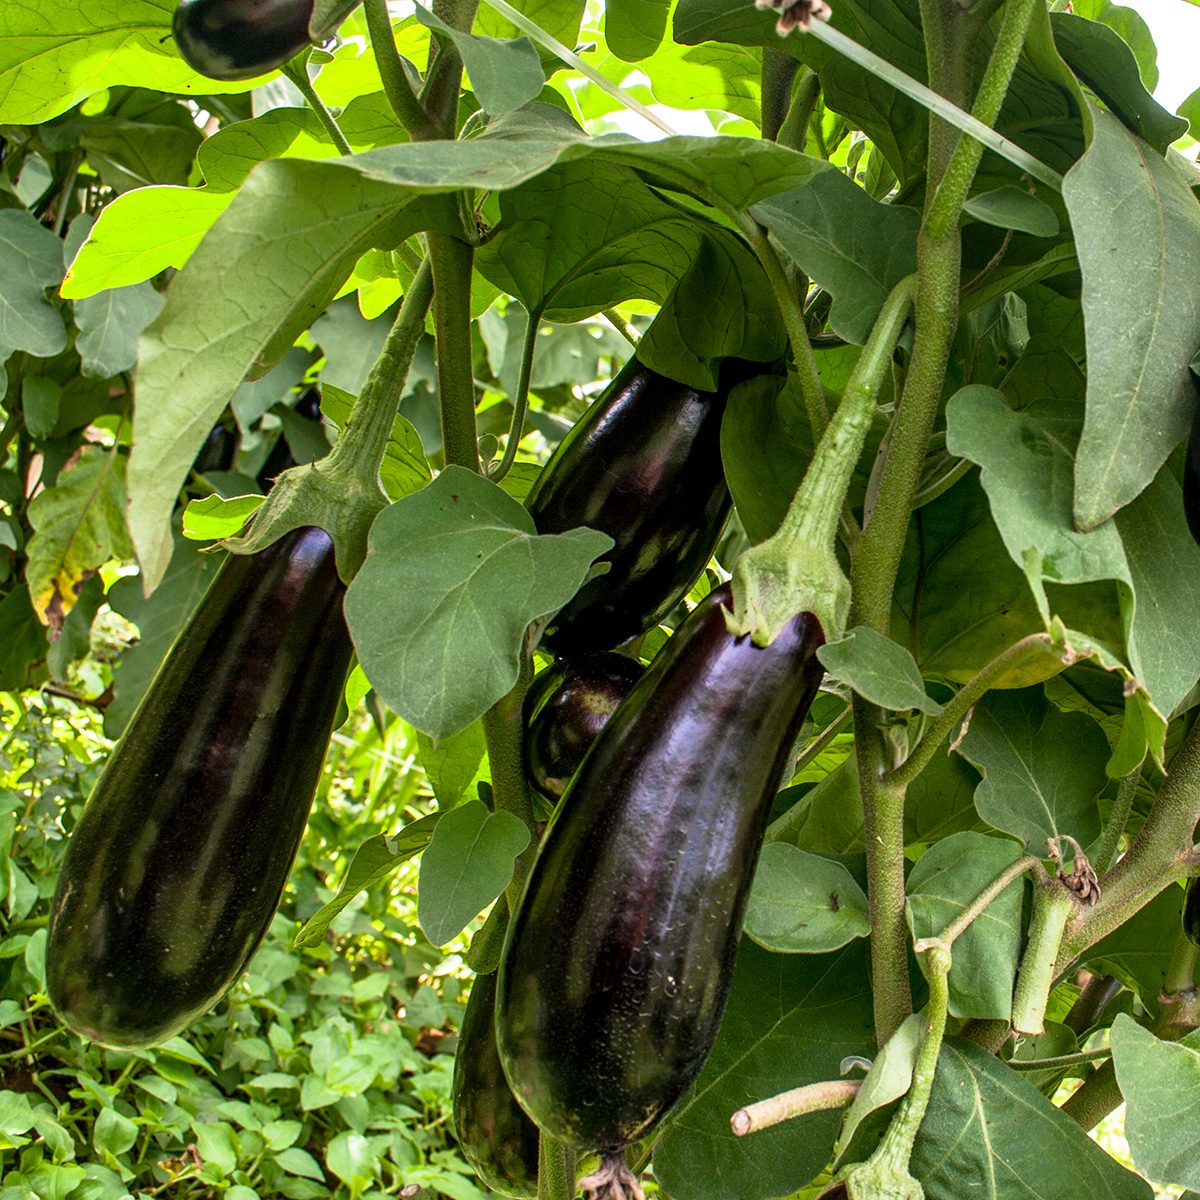 Eggplant in the garden.